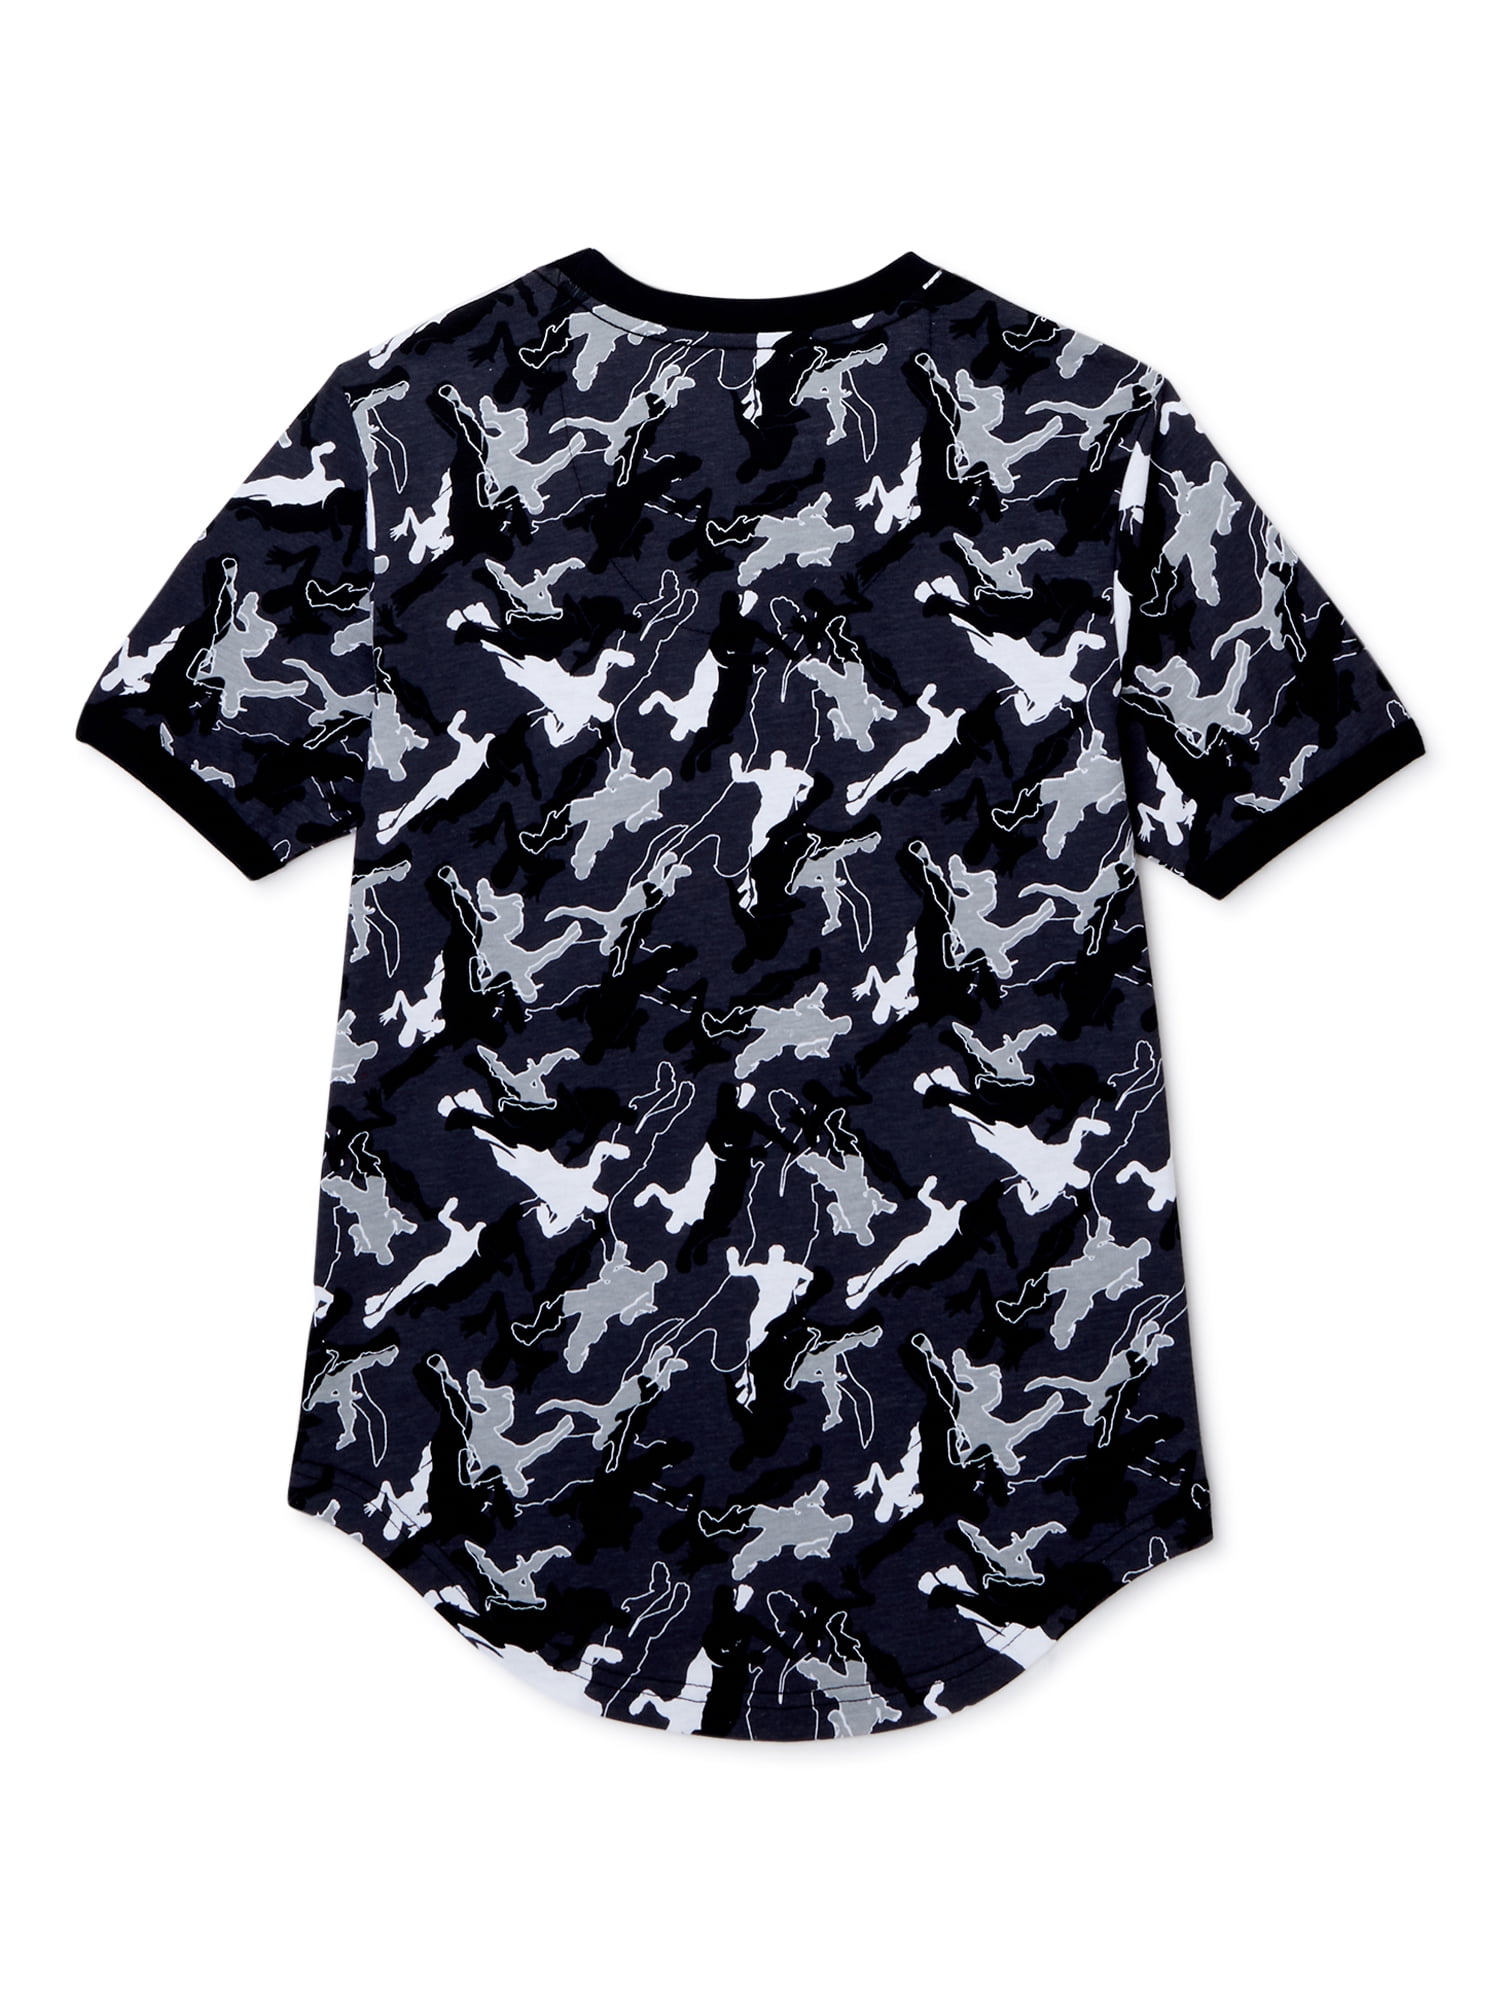 FORTNITE Boys Short Sleeve T-Shirt Camo Tee Gaming Kids Shirt, Size Large  10/12